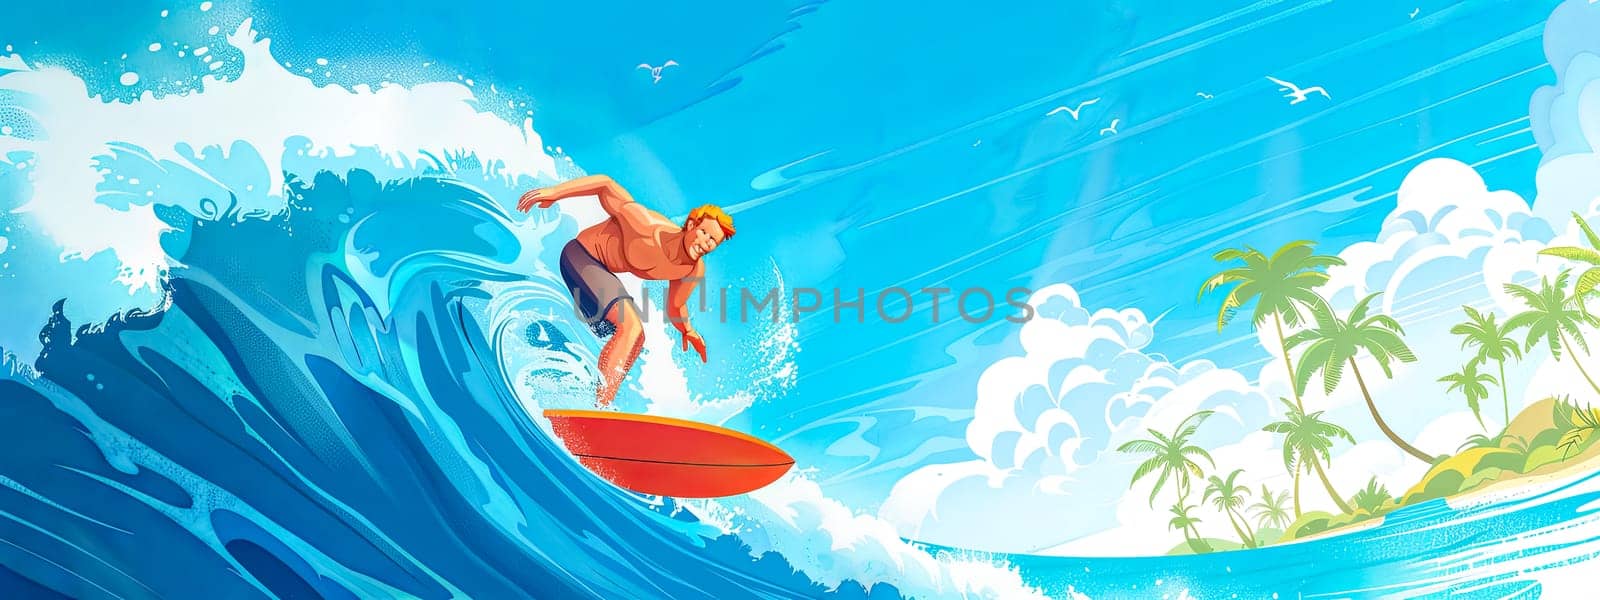 Surfer riding a wave on a sunny day by Edophoto